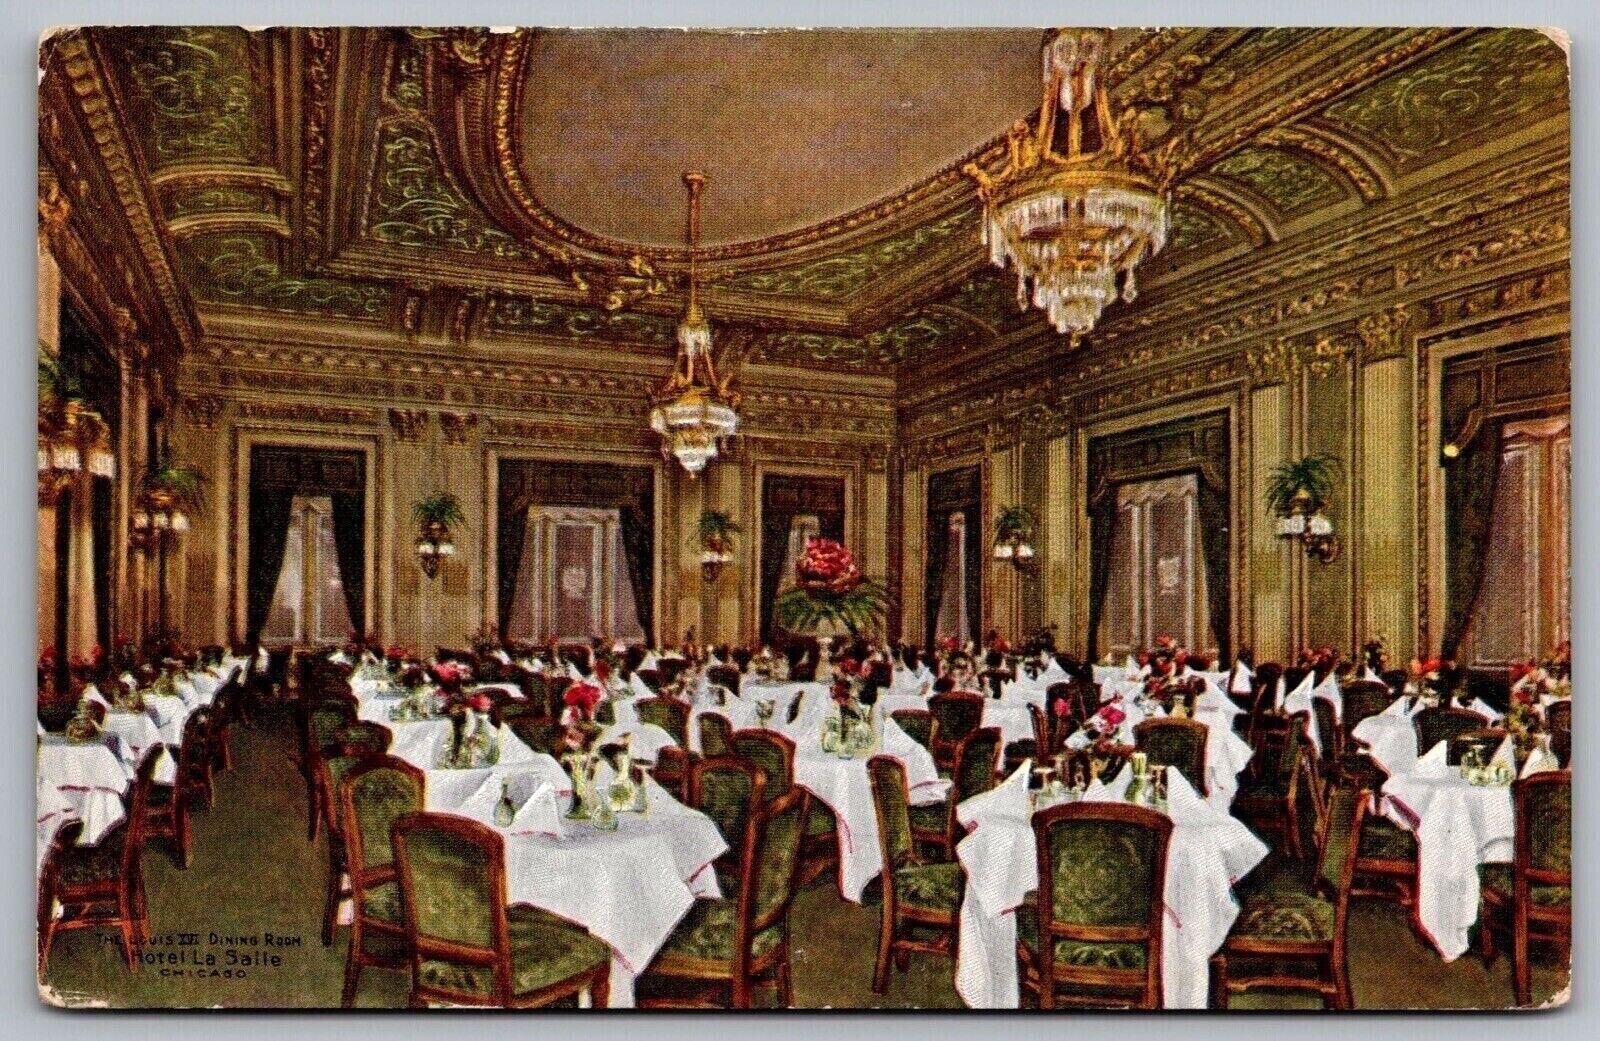 Hotel La Saile Chicago Illinois Dining Room Chandelier Interior Vintage Postcard